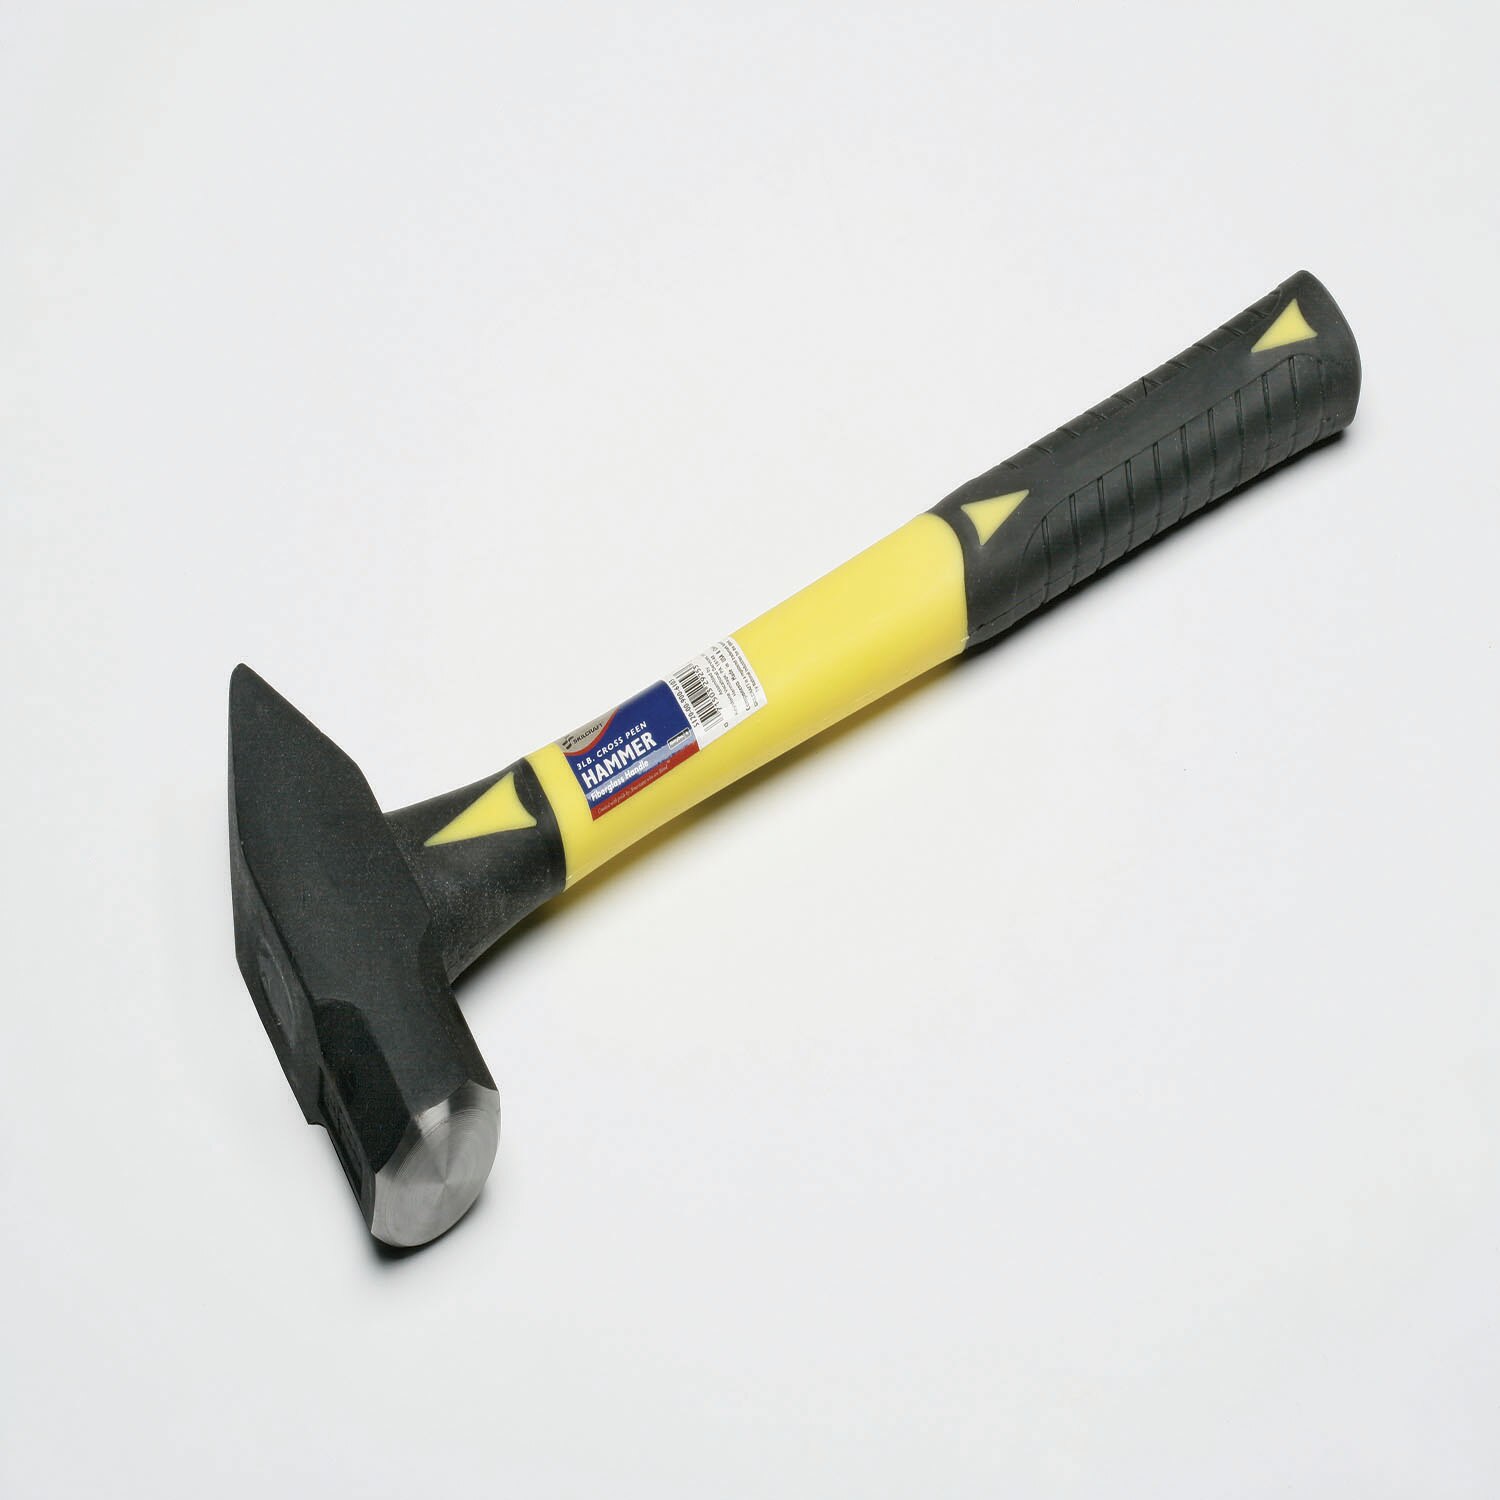 Hammer - 3 lb, Cross-Peen, 15" Fiberglass Handle, Cushioned Grip